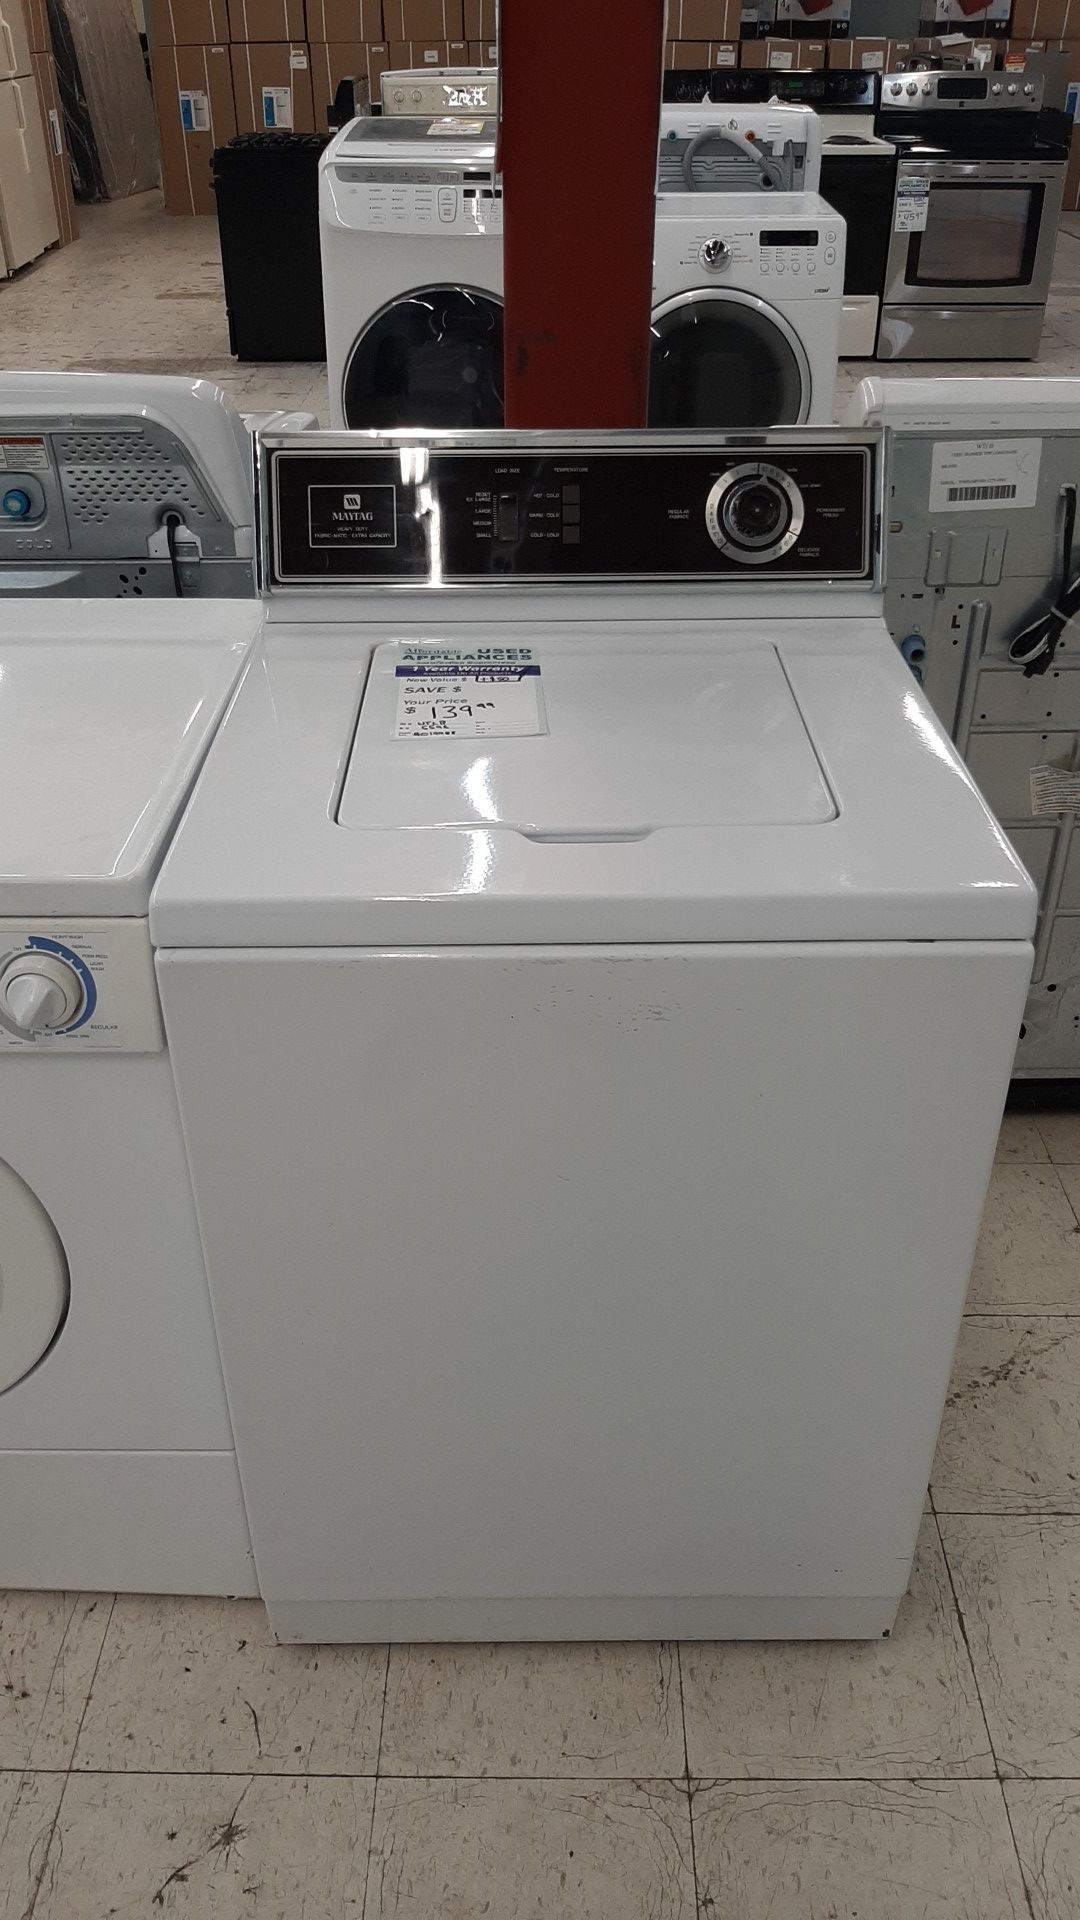 Refurbished 80's Maytag washing machine